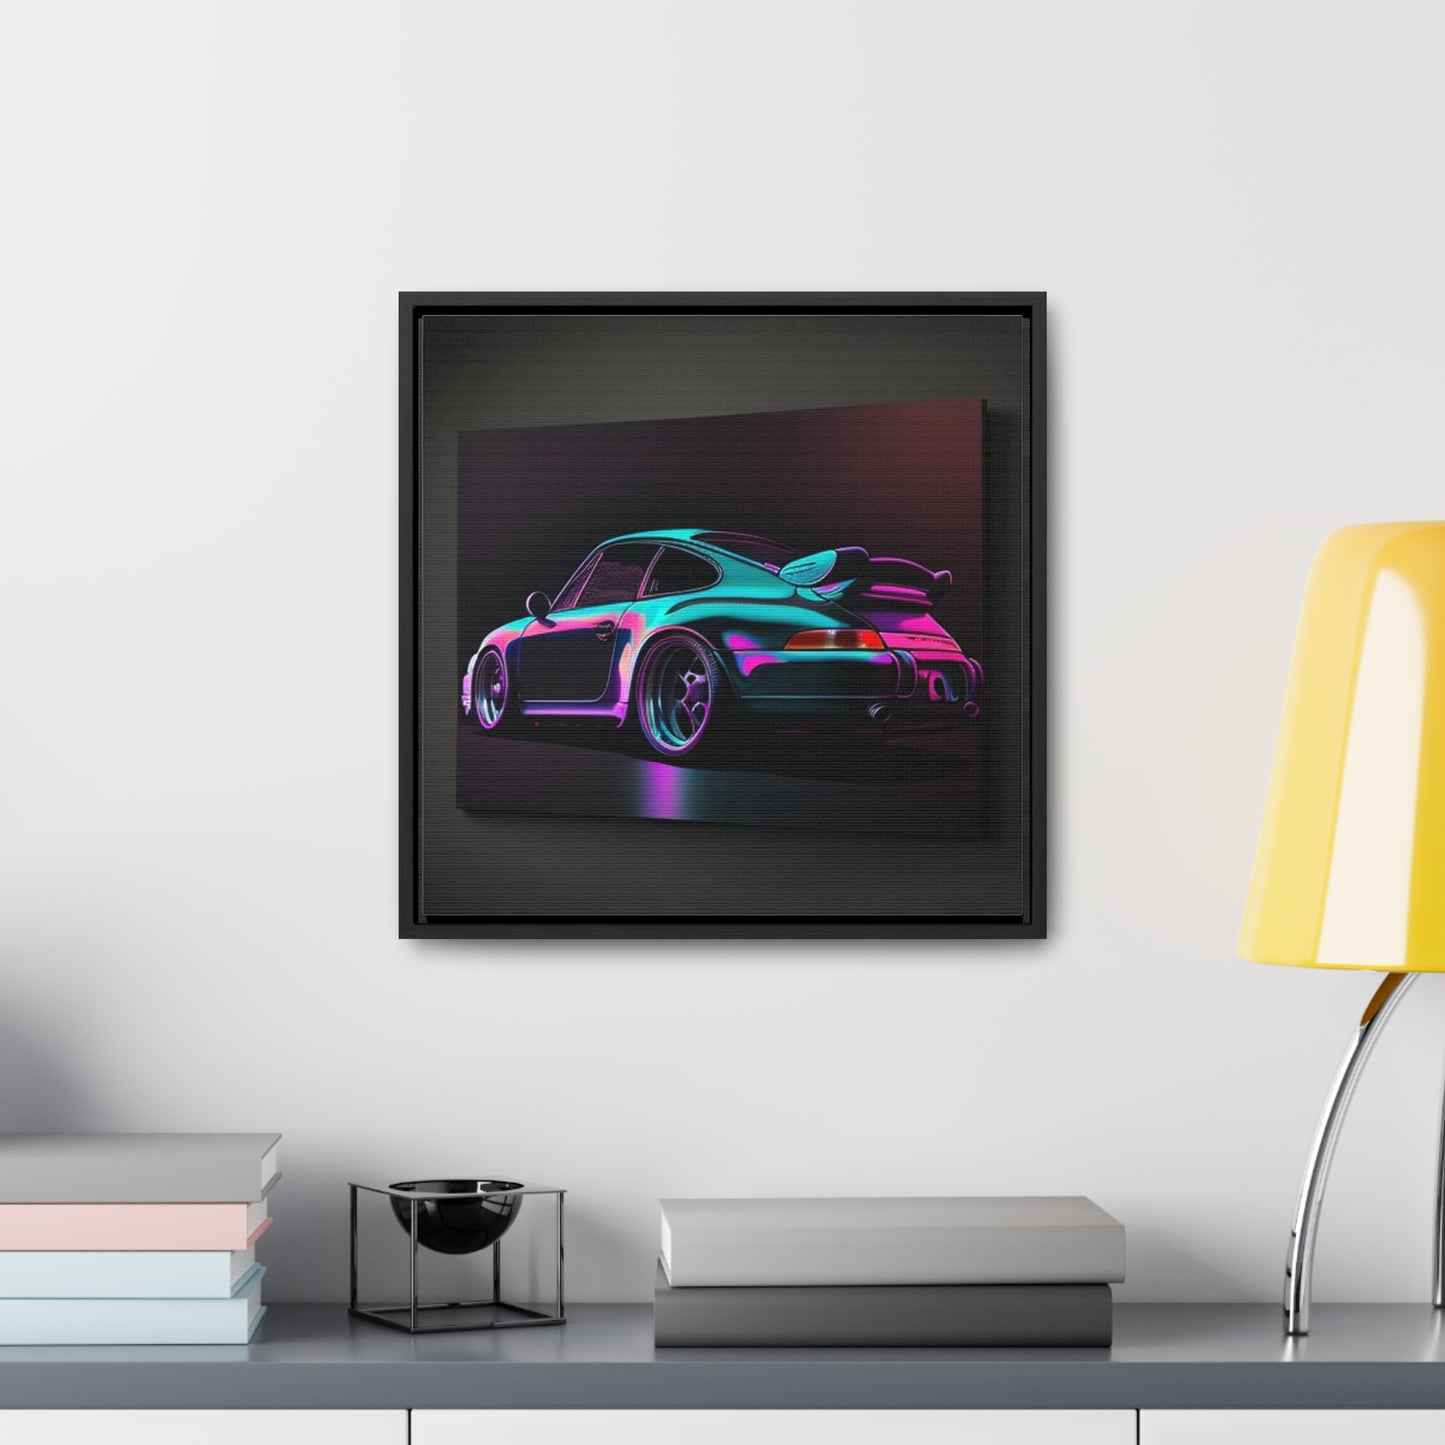 Gallery Canvas Wraps, Square Frame Porsche Purple 1